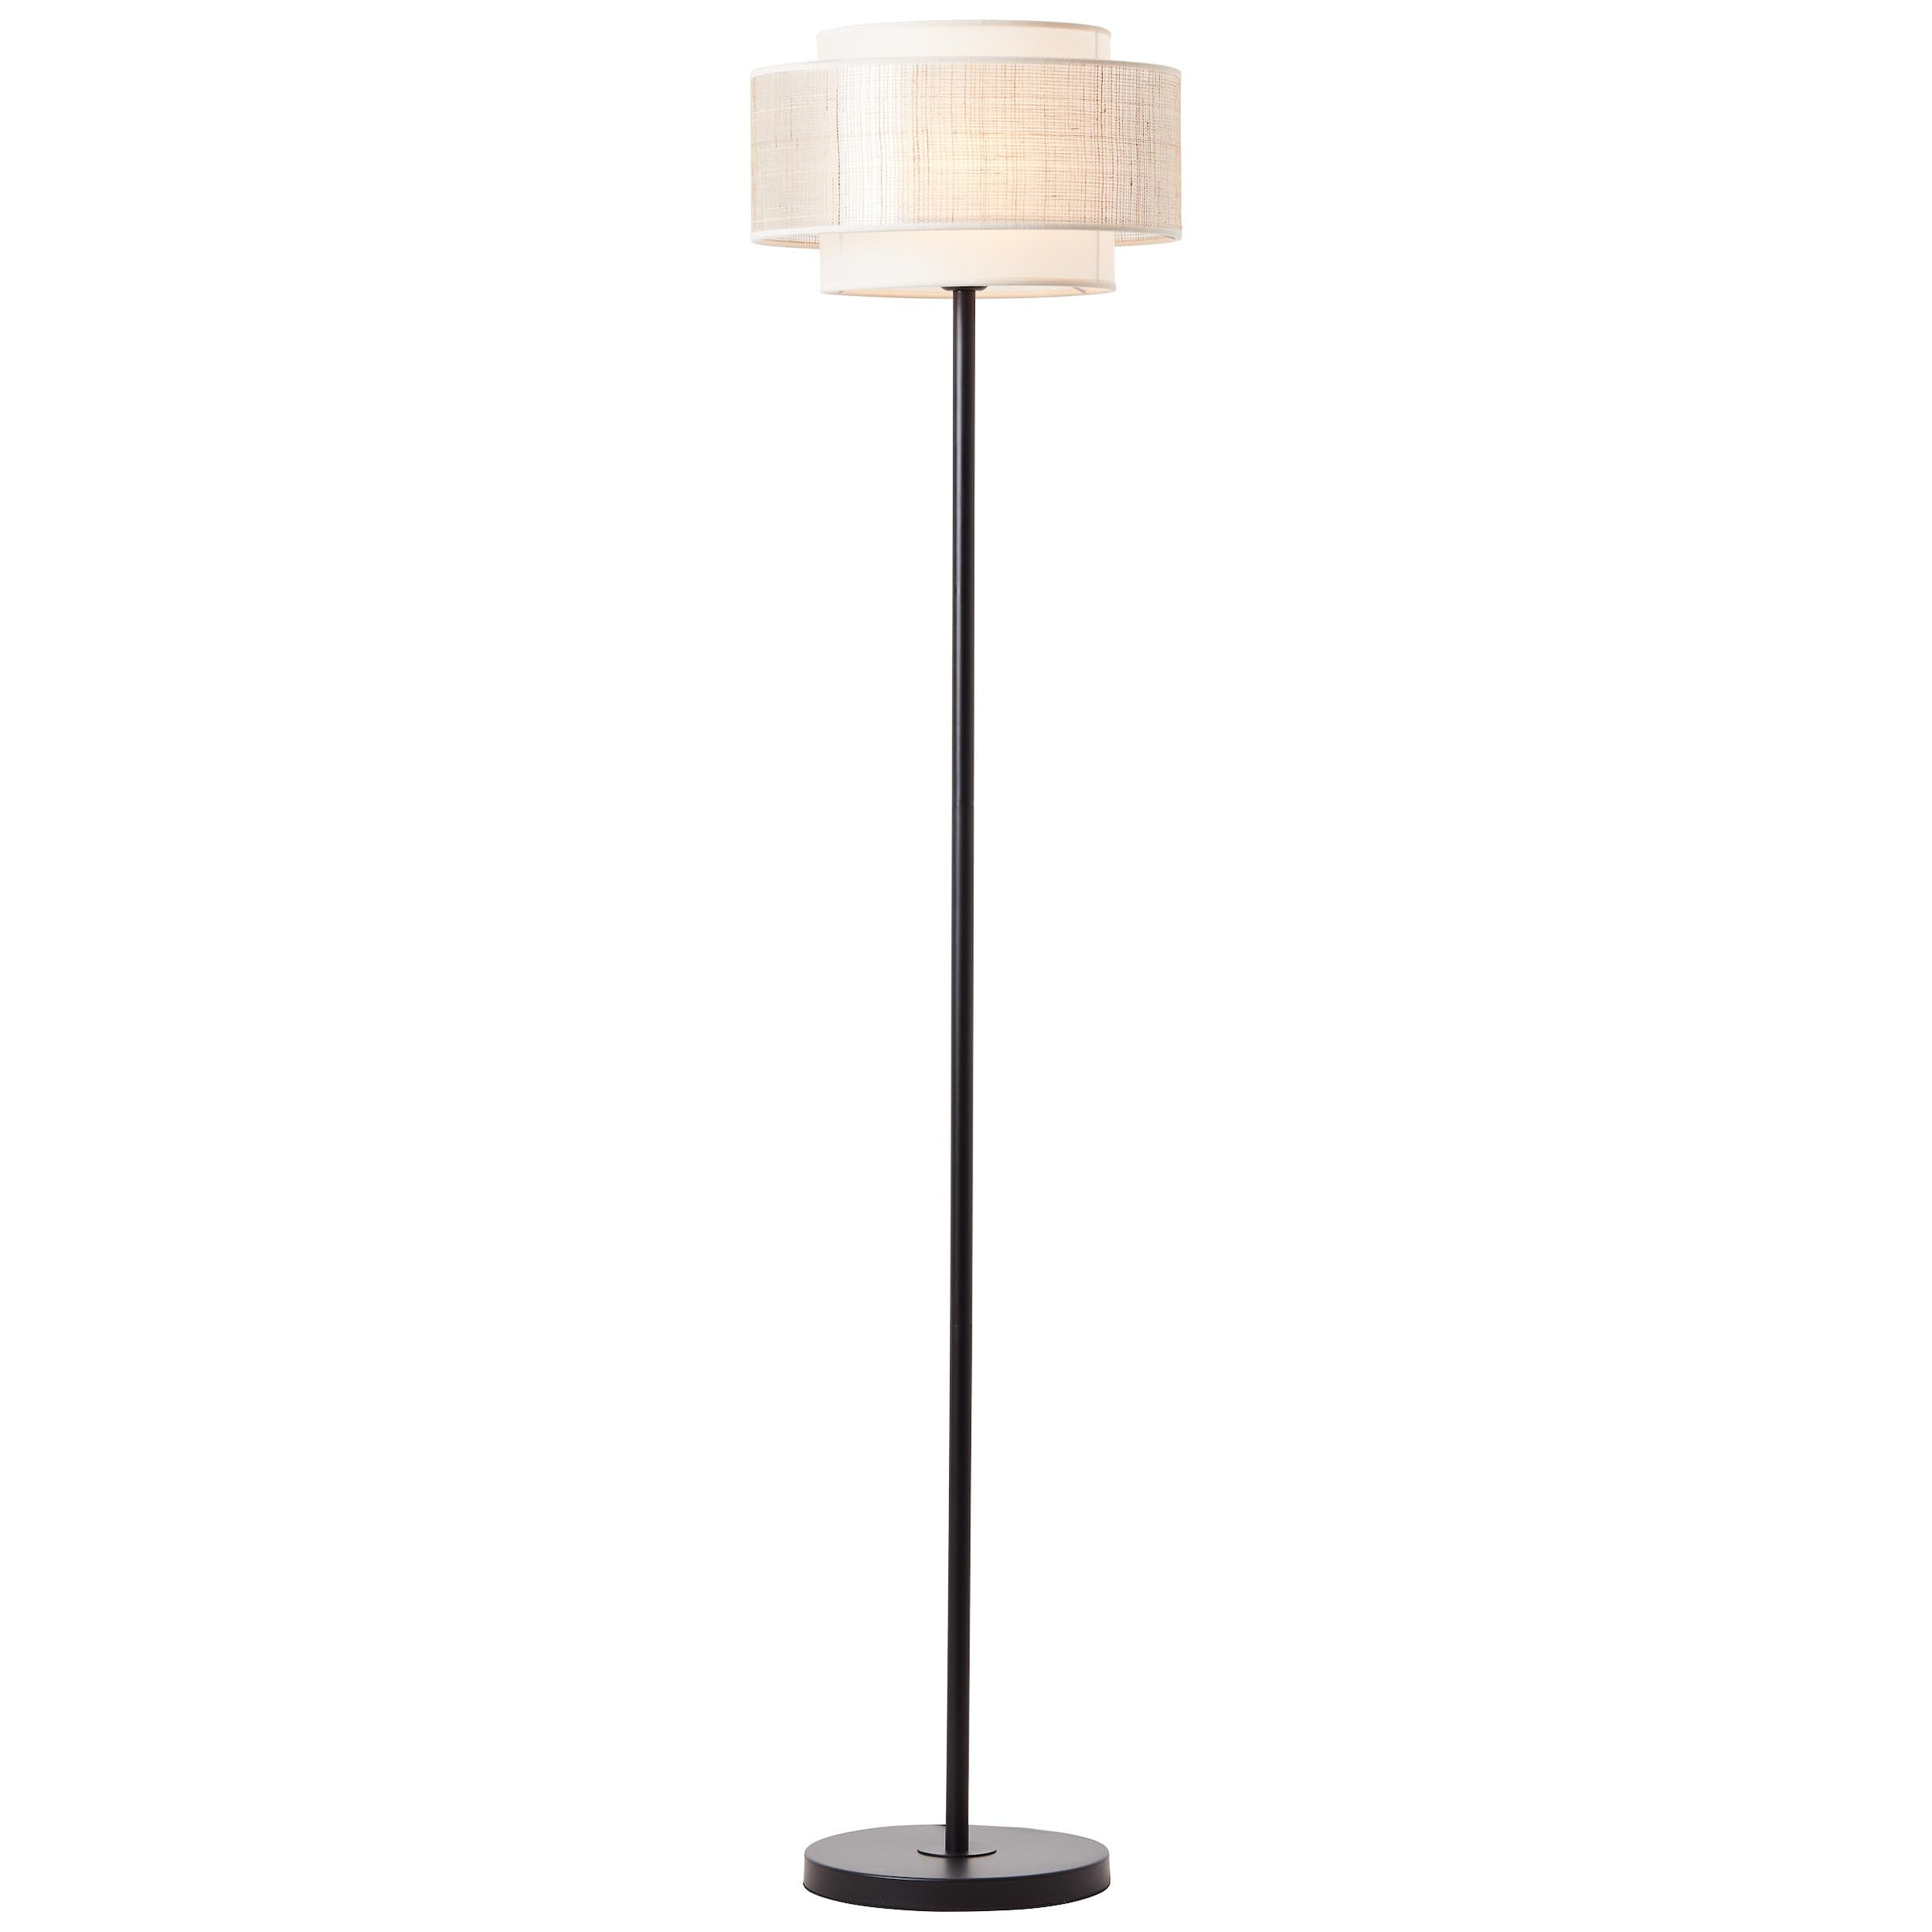 Brilliant Stehlampe »Odar«, 1 flammig-flammig, 152,5 cm Höhe, Ø 36 cm, E27, Metall/Textil/Papier, schwarz/beige